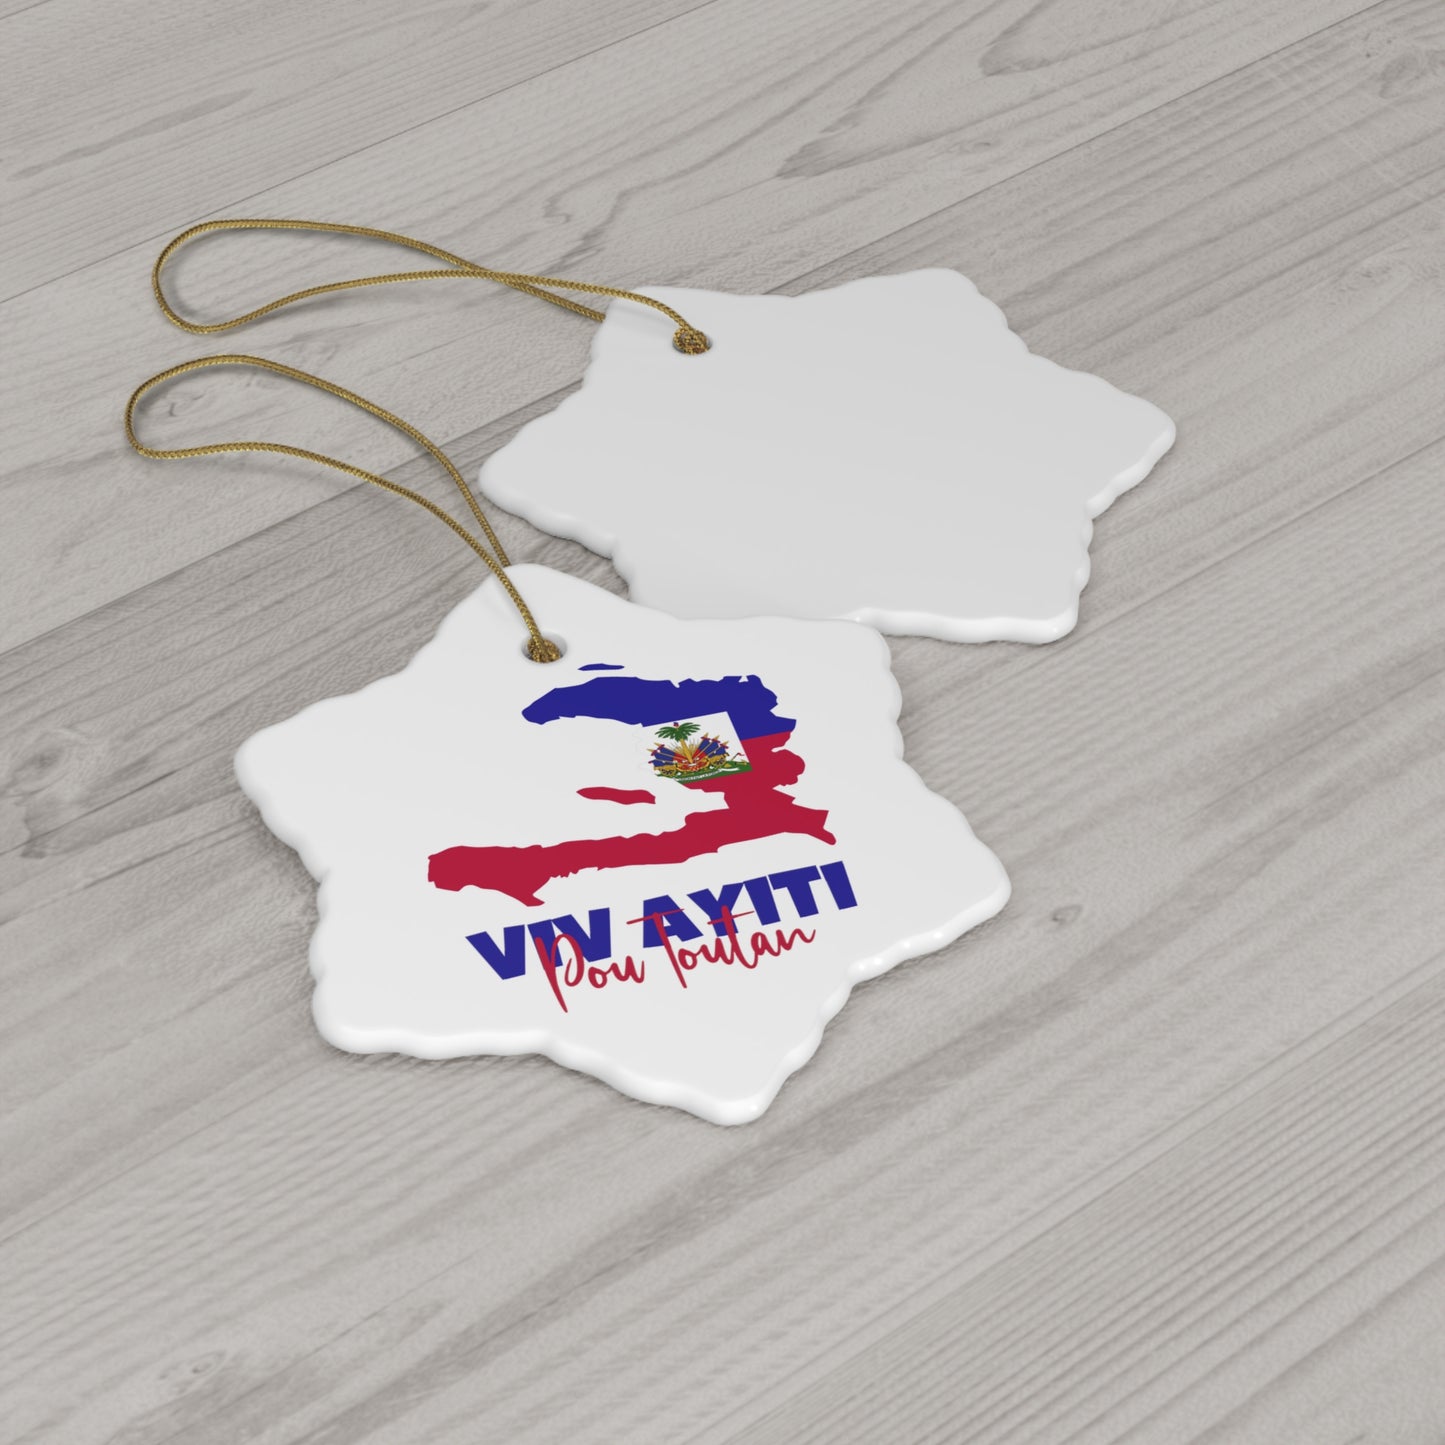 Viv Ayiti Pou Toutan Haitian Forever Haiti Ceramic Ornament | Christmas Tree Ornaments